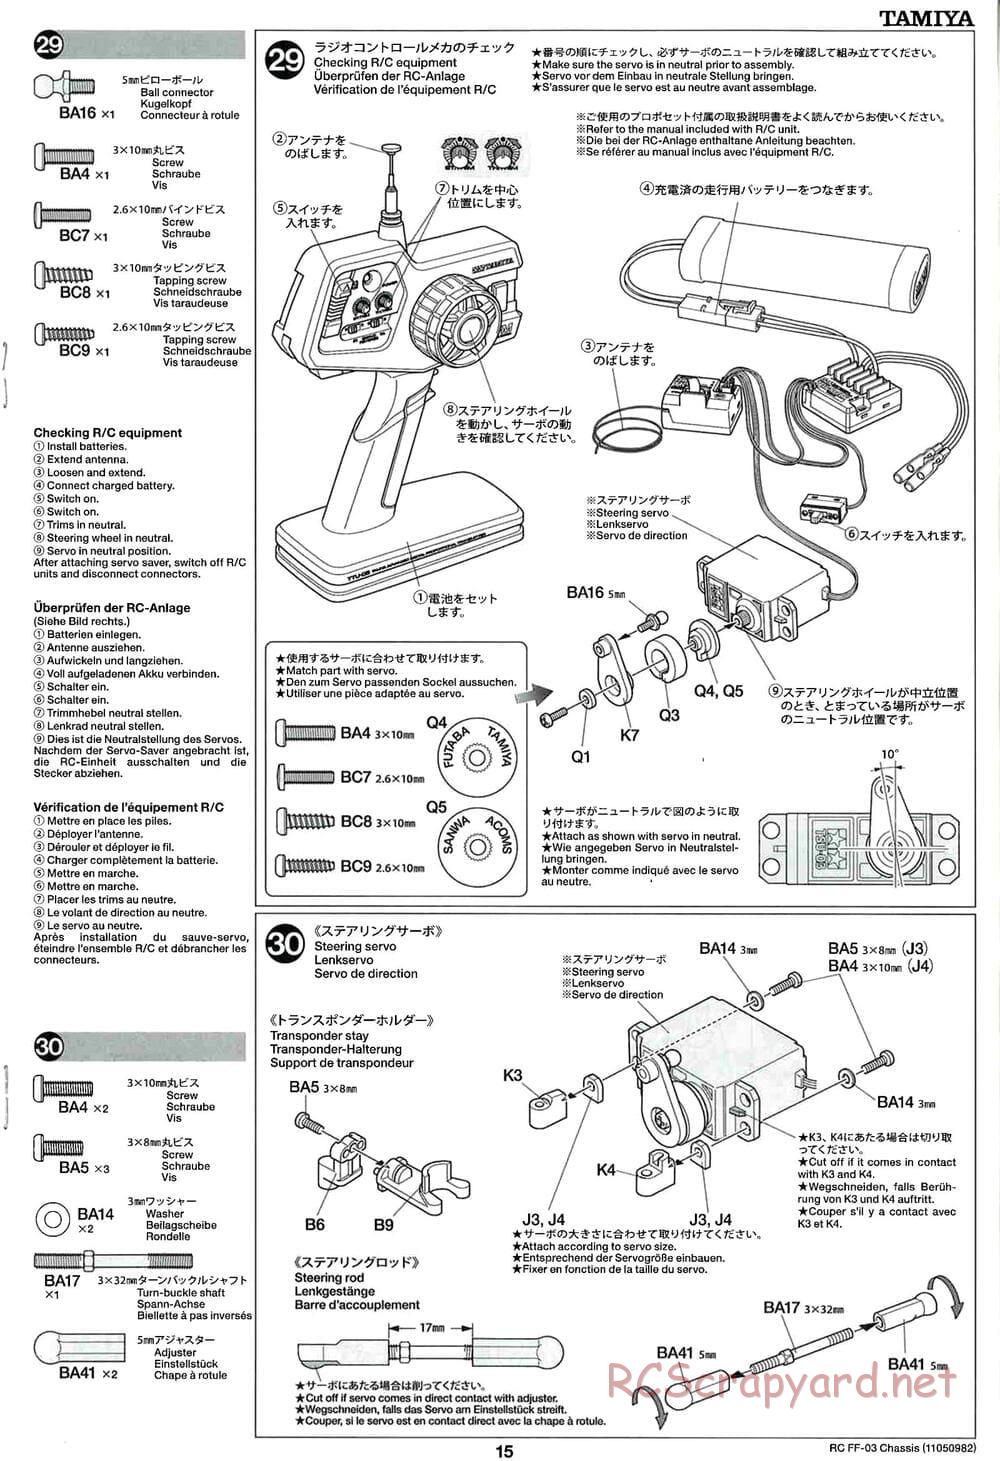 Tamiya - FF-03 Chassis - Manual - Page 15